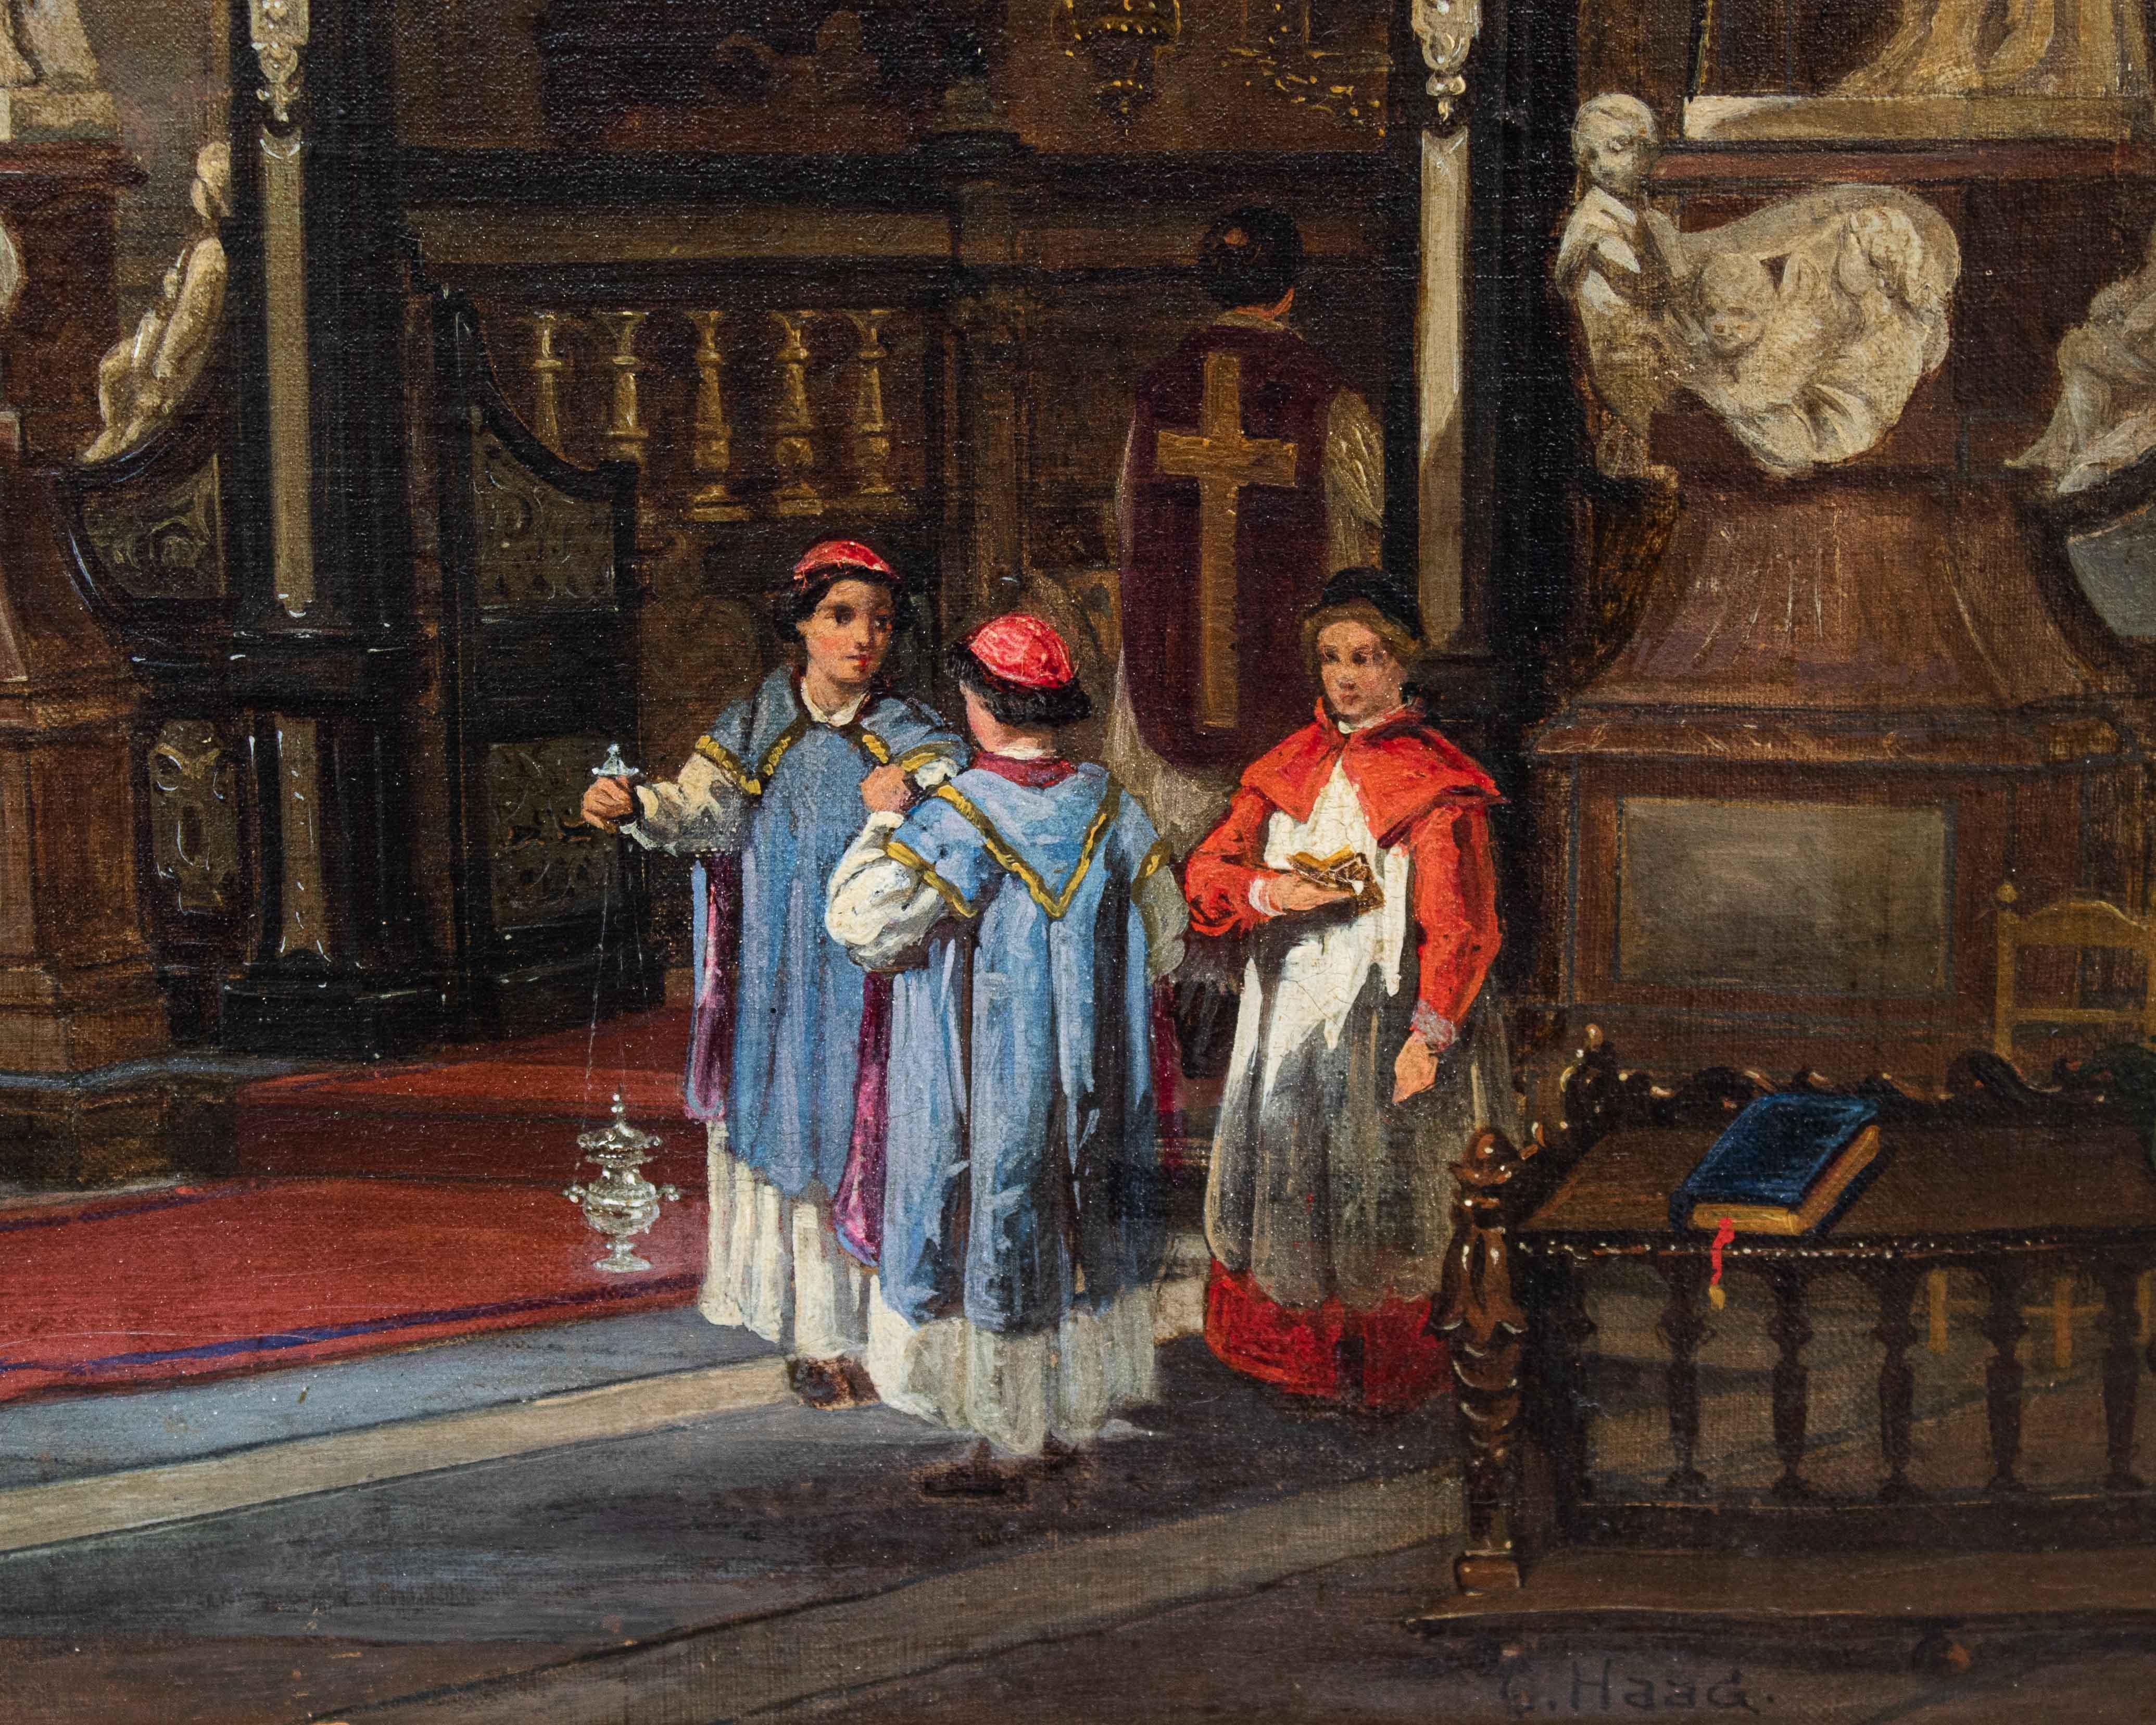 European 19th Century Church interior Painting Oil on canvas by Carl Haag